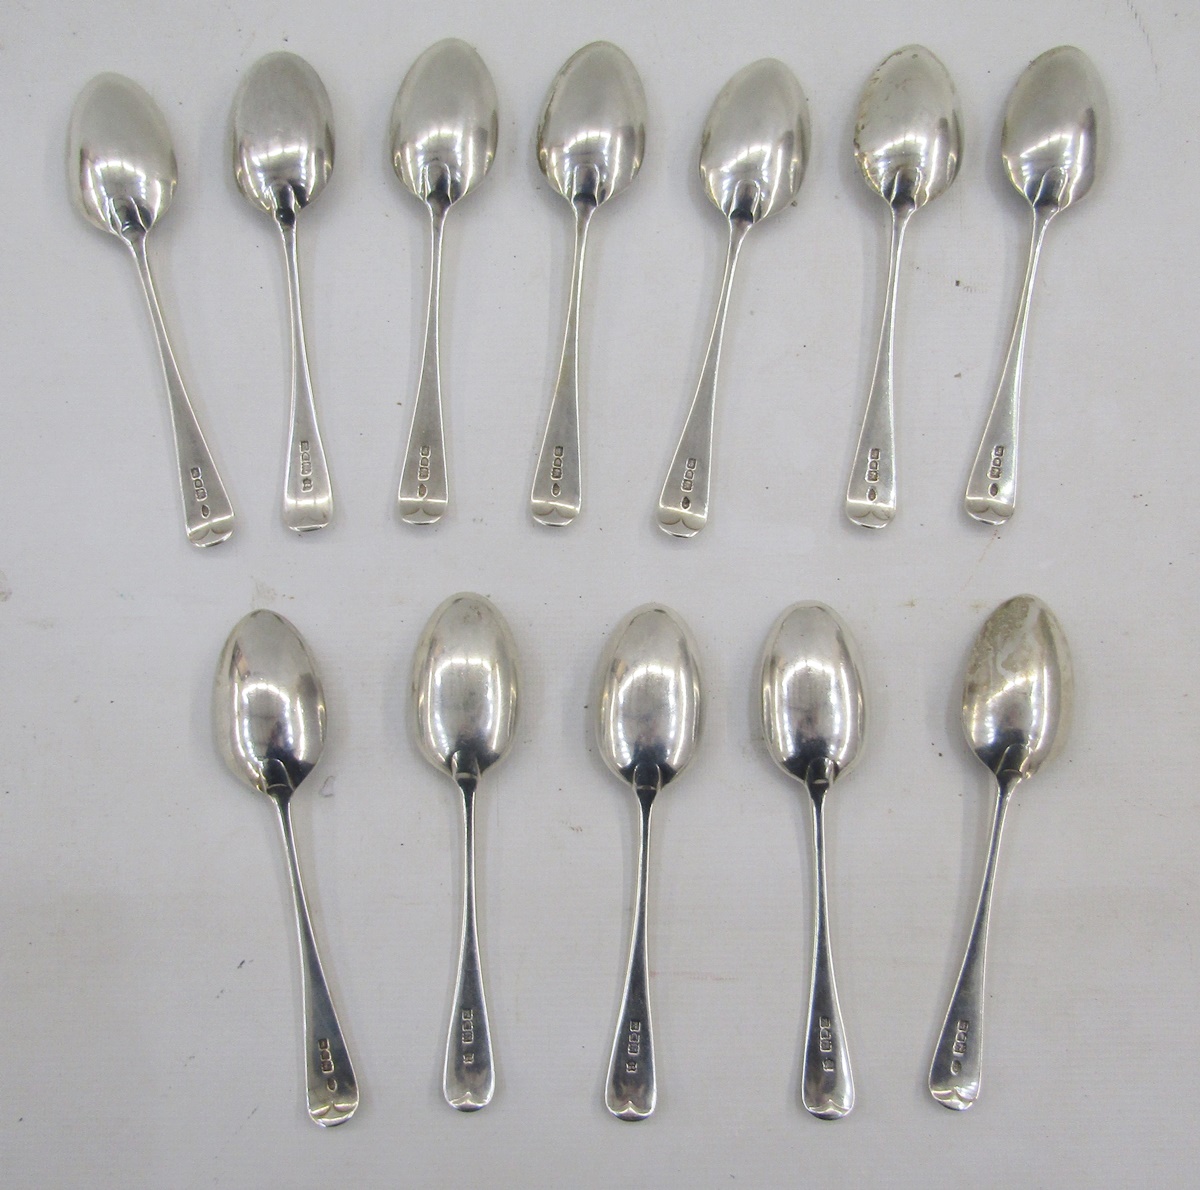 Twelve matched Edwardian silver dessert spoons, old English pattern handles, hallmarked London - Image 2 of 3